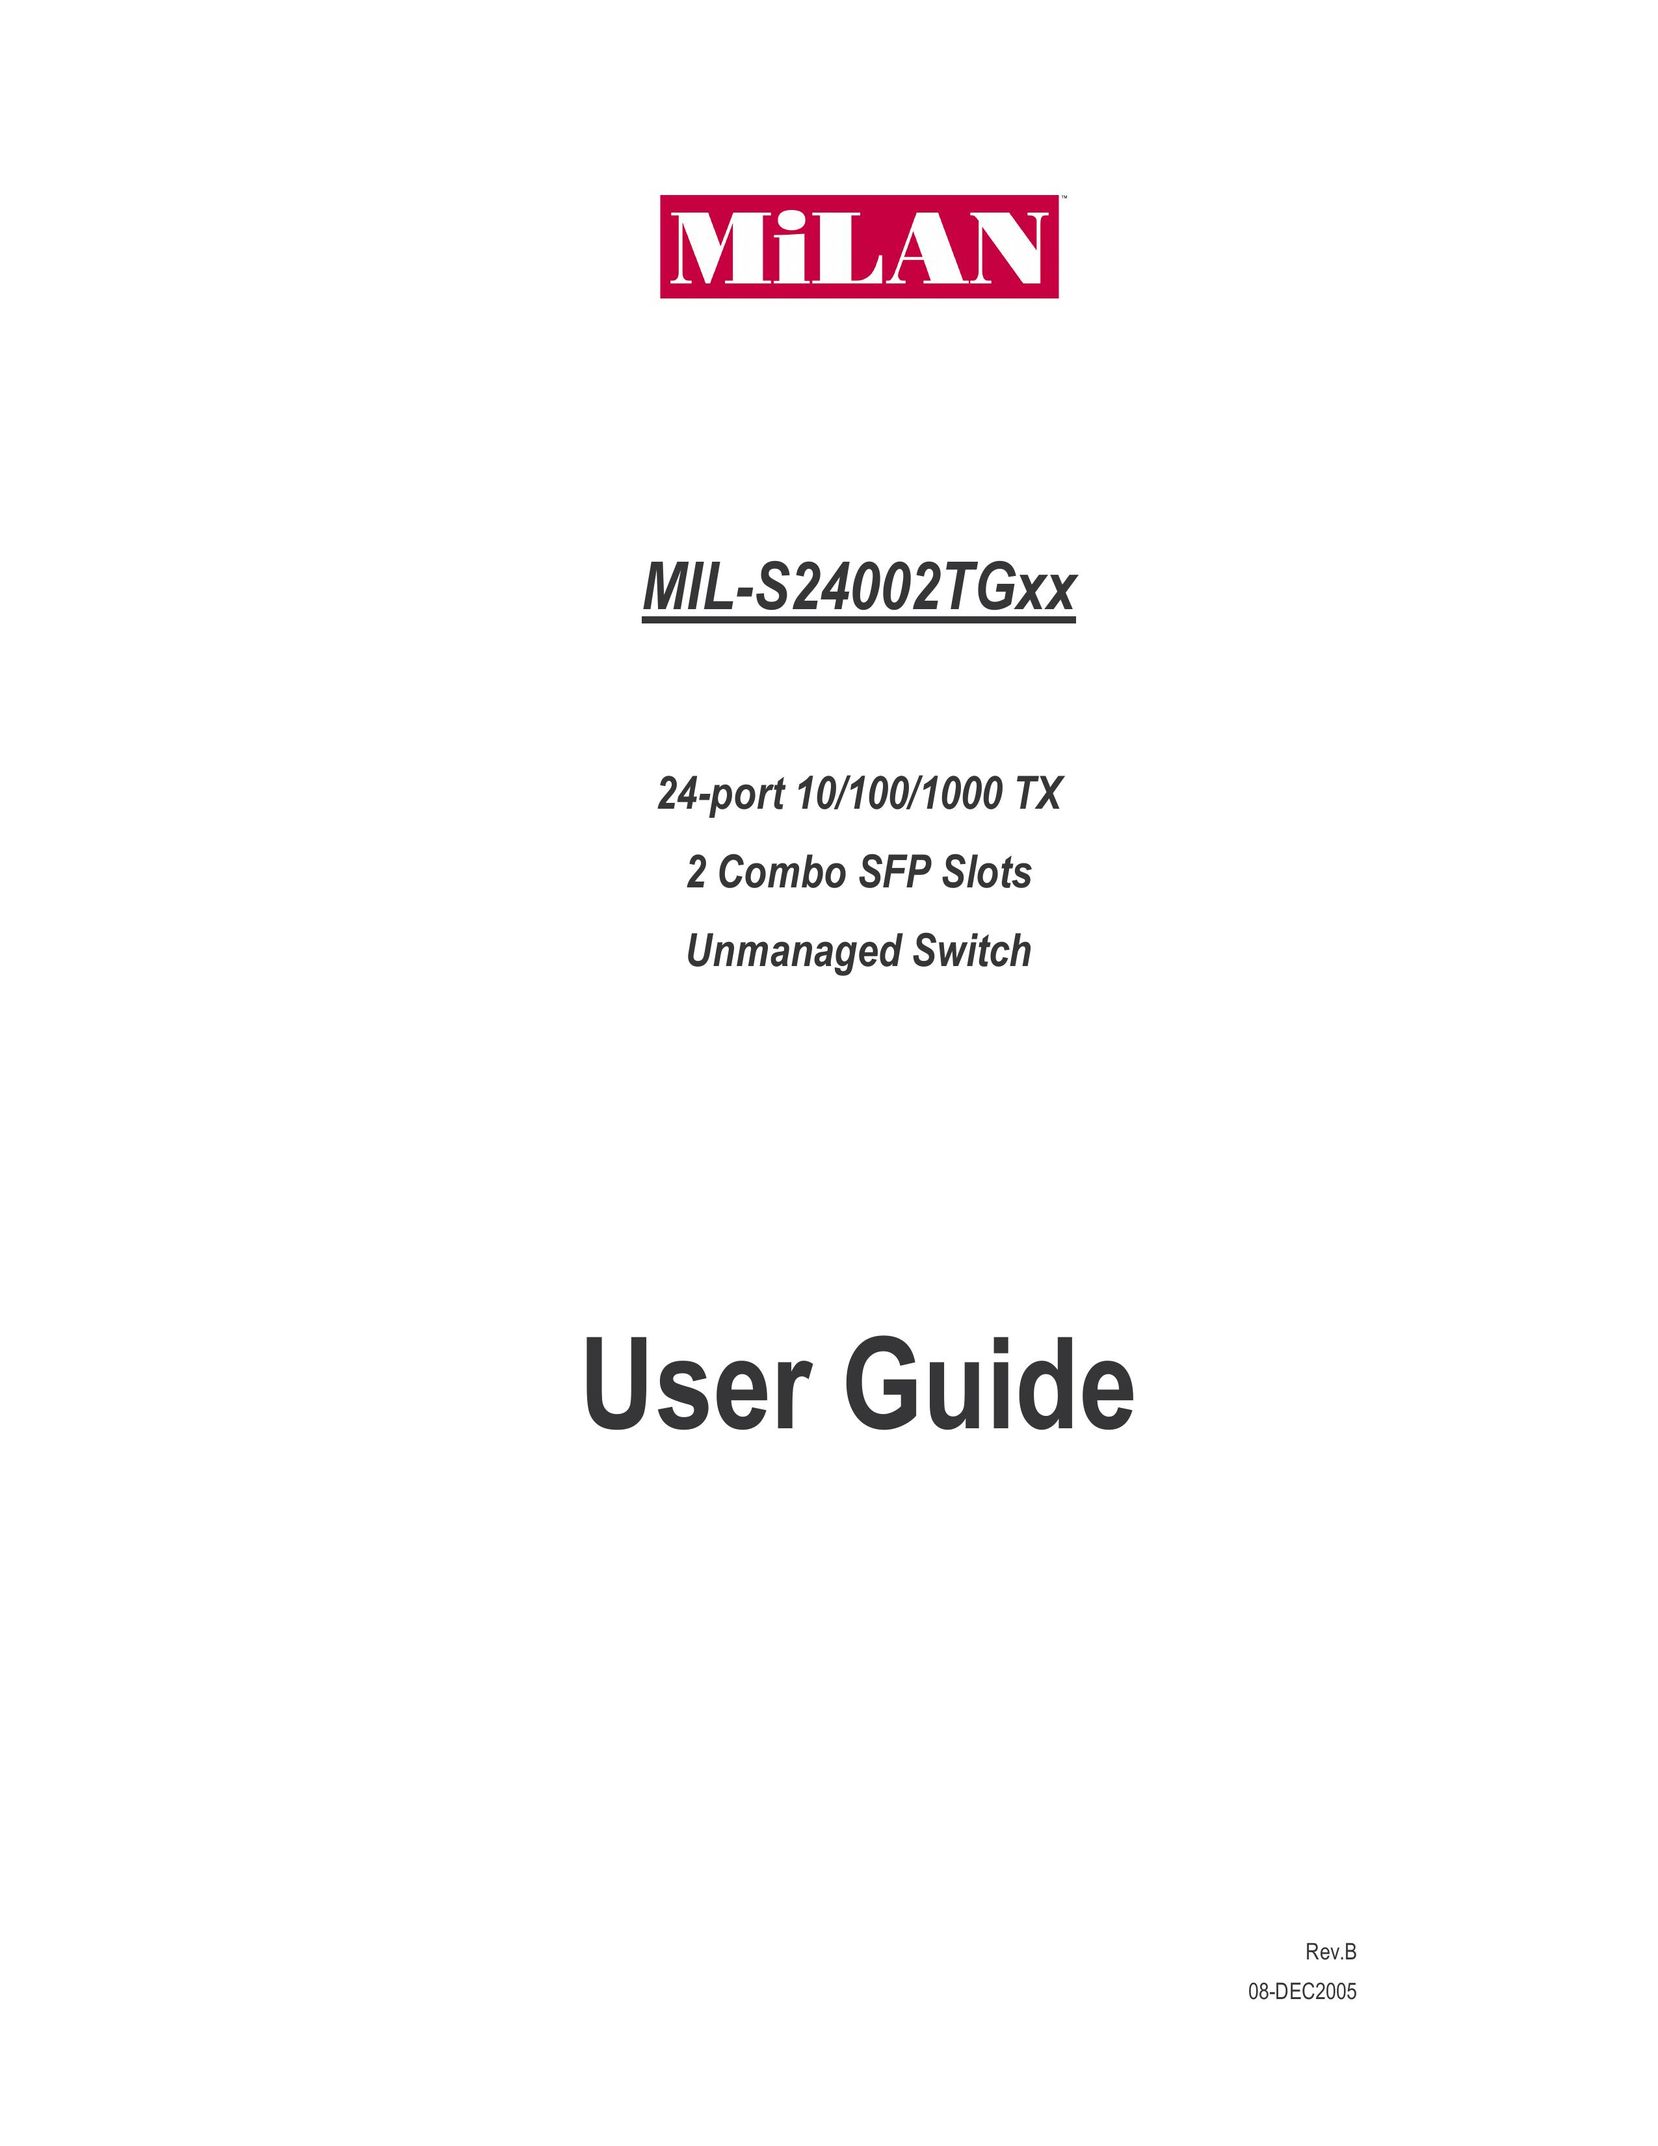 Milan Technology MIL-S24002TGXX Switch User Manual